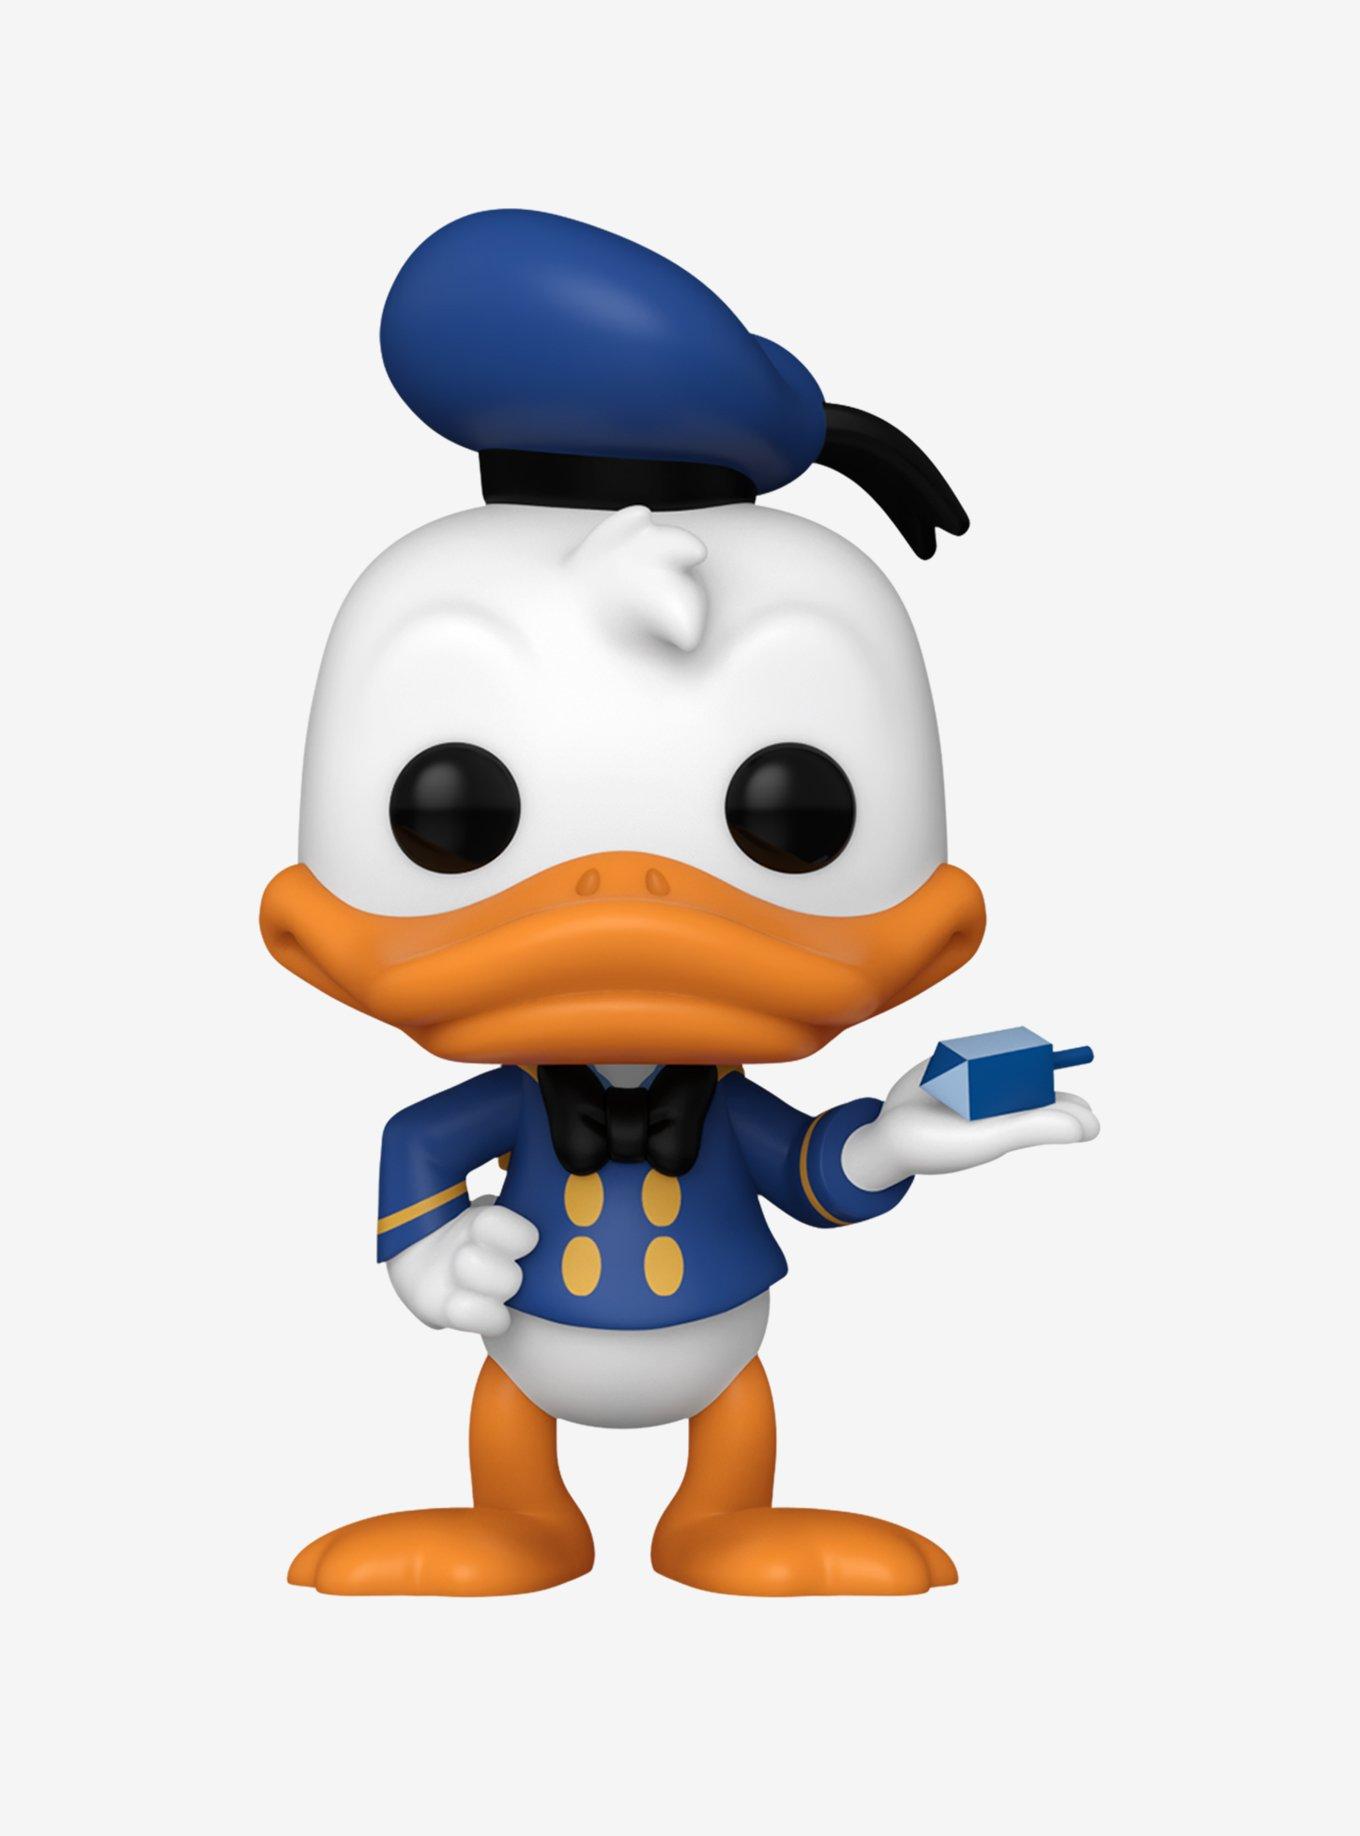 Donald Duck Birthday 2023 Card Case